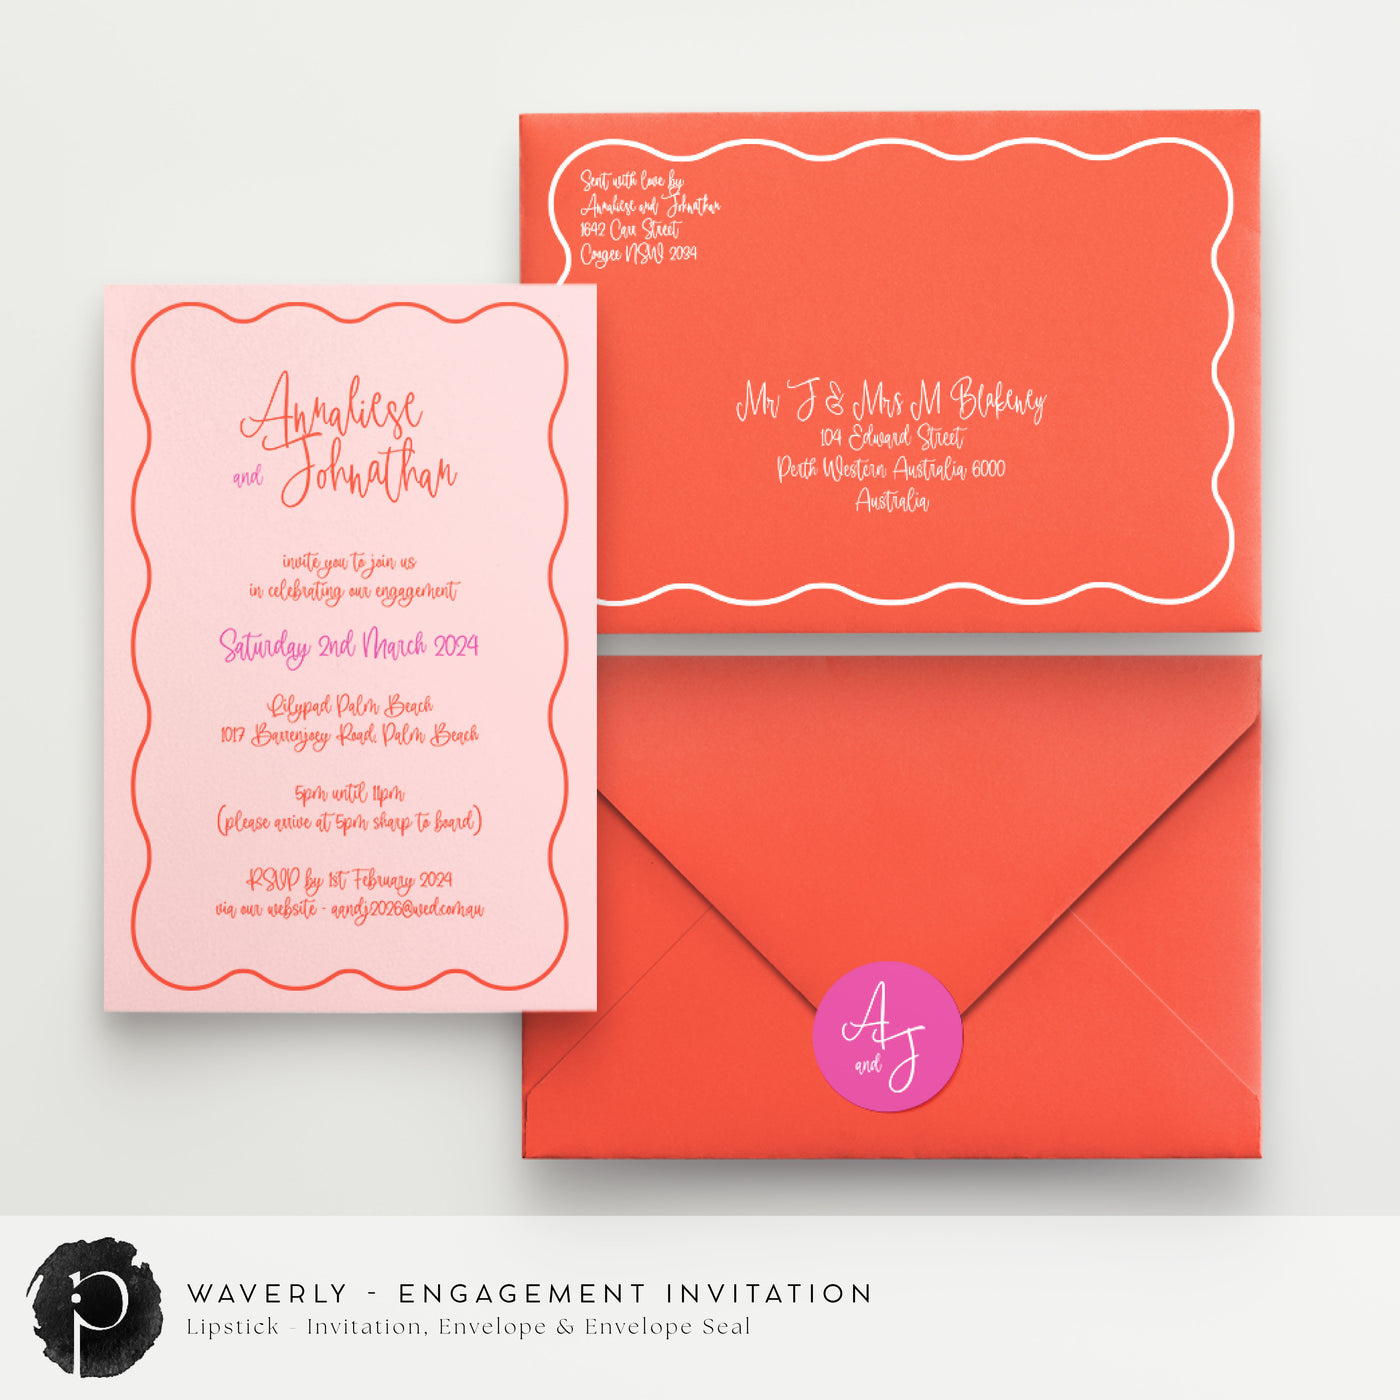 Waverly - Engagement Invitations